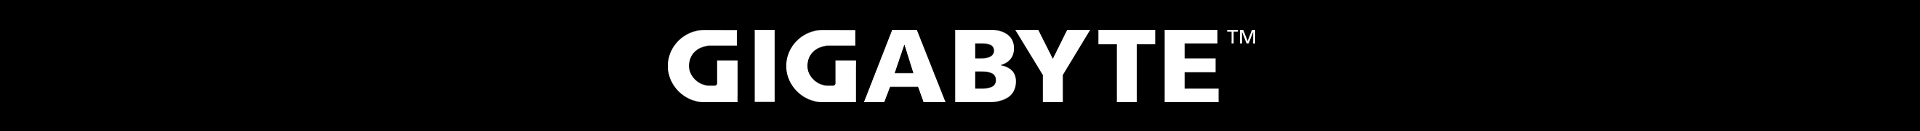 Gigabyte Testpage 05.17.gigabyte Logo Black